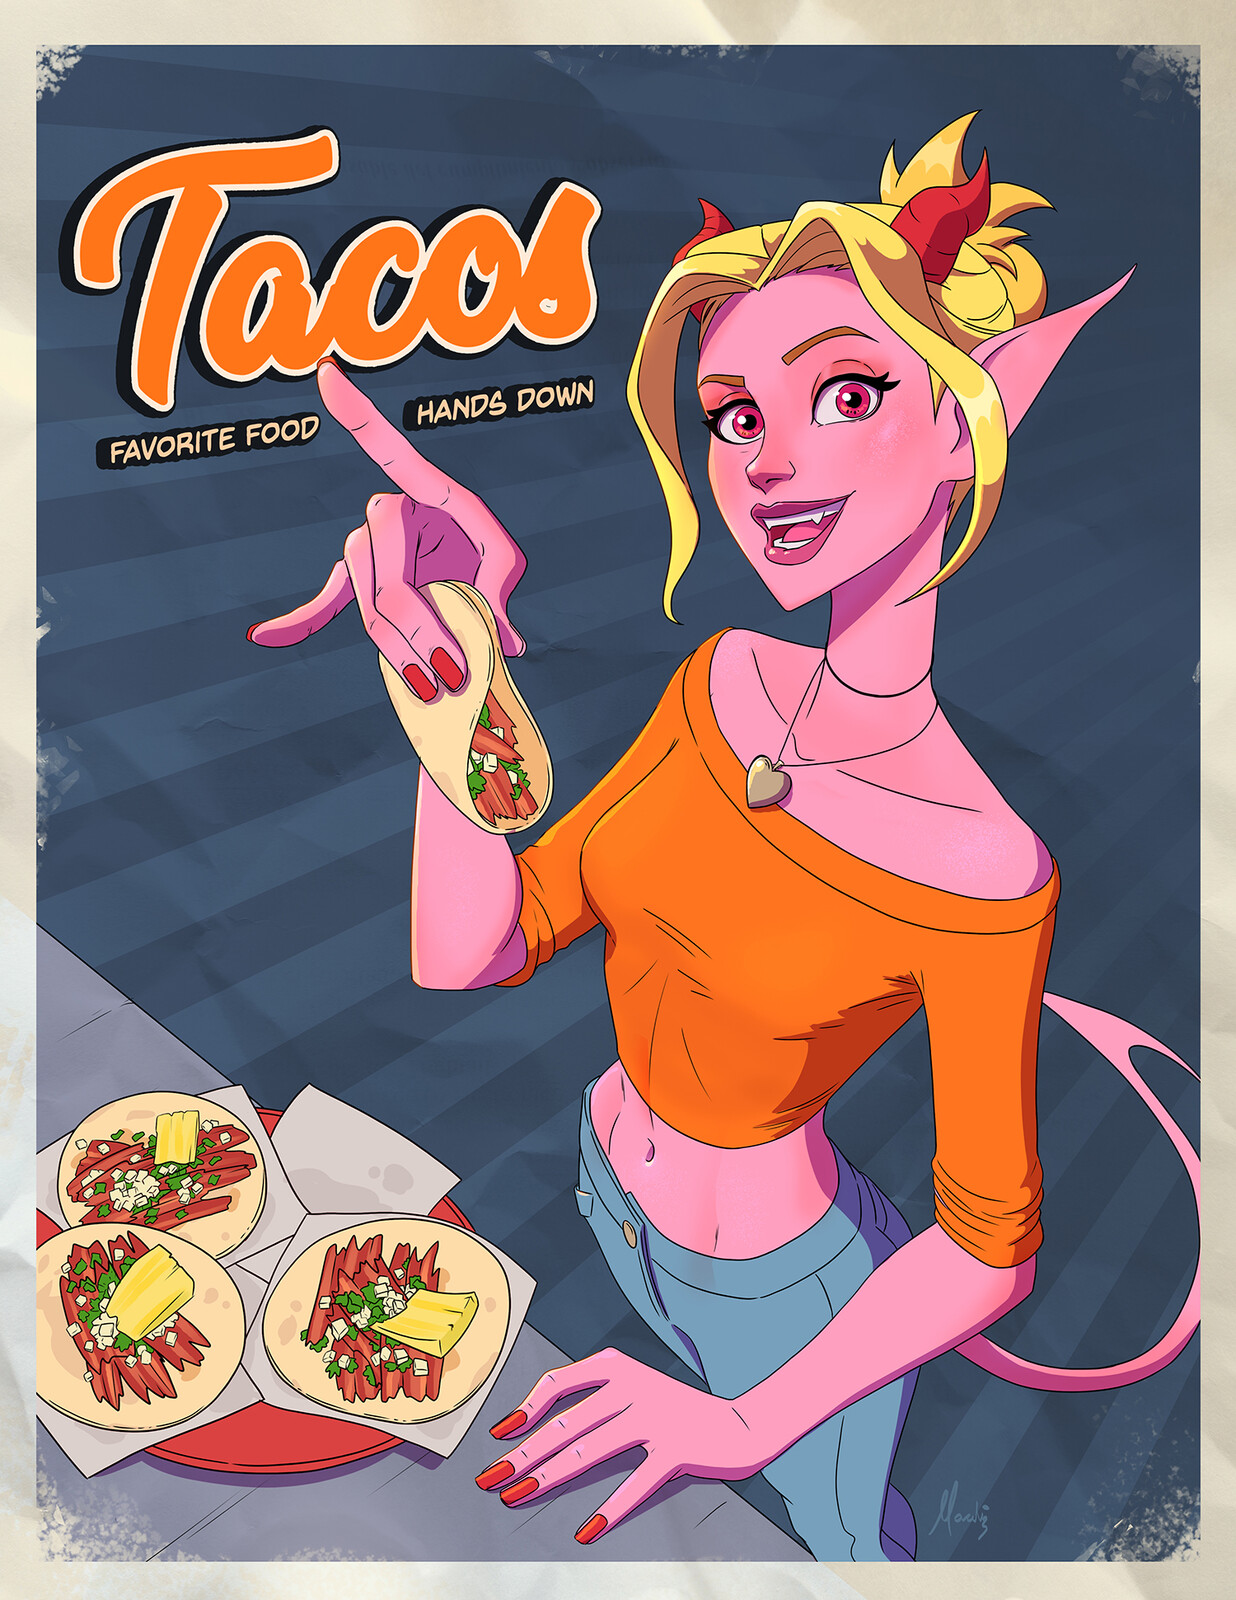 She loves Tacos!